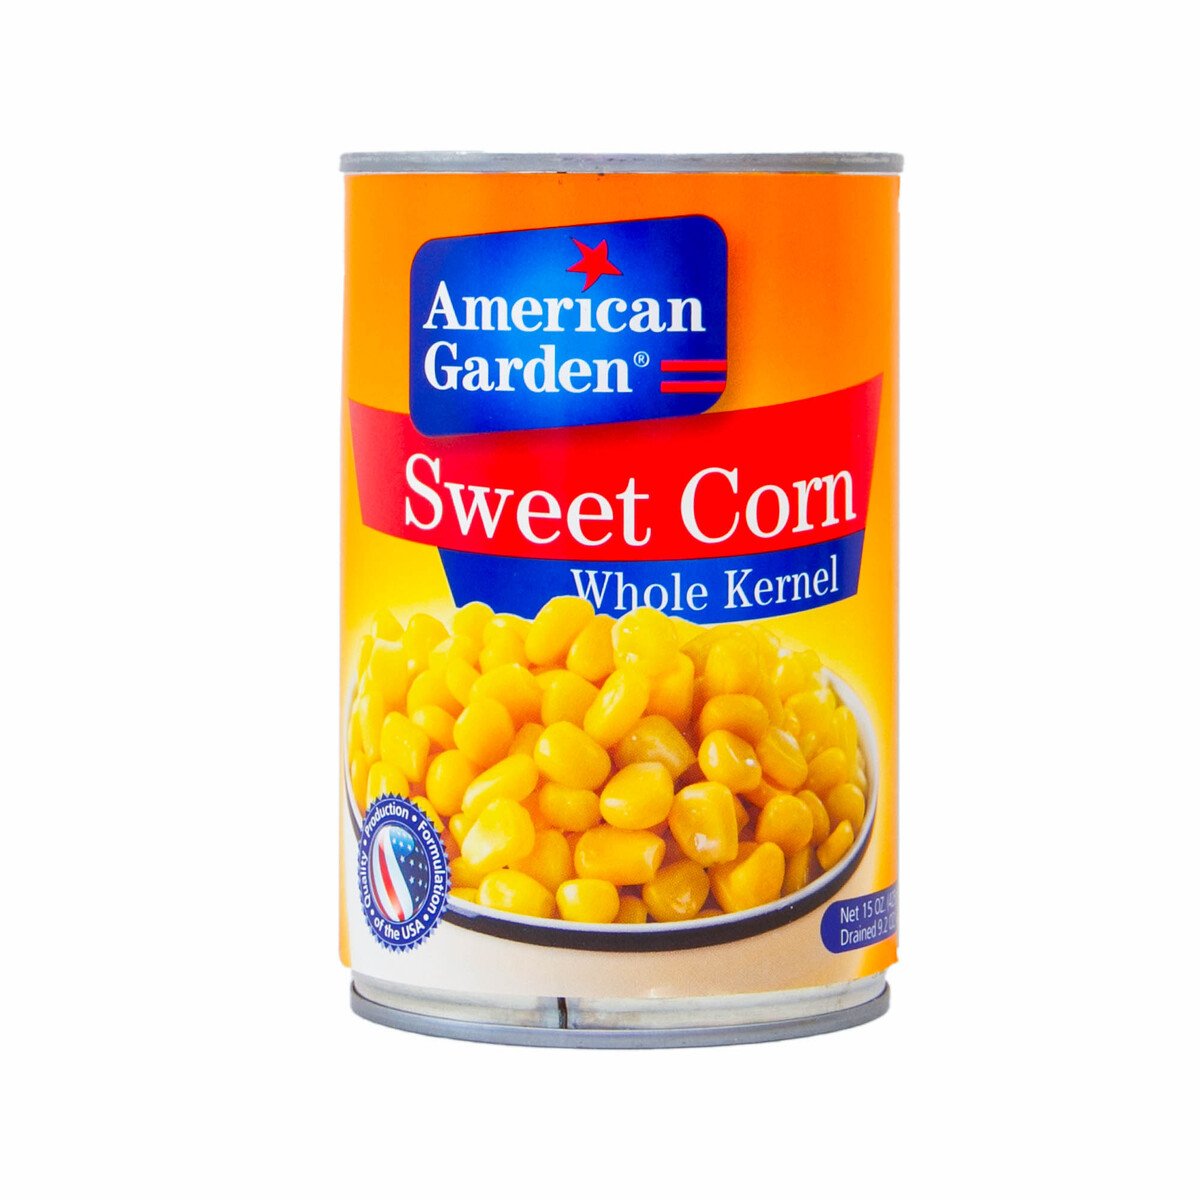 Americana Garden Sweet Corn Whole Kernel 425g